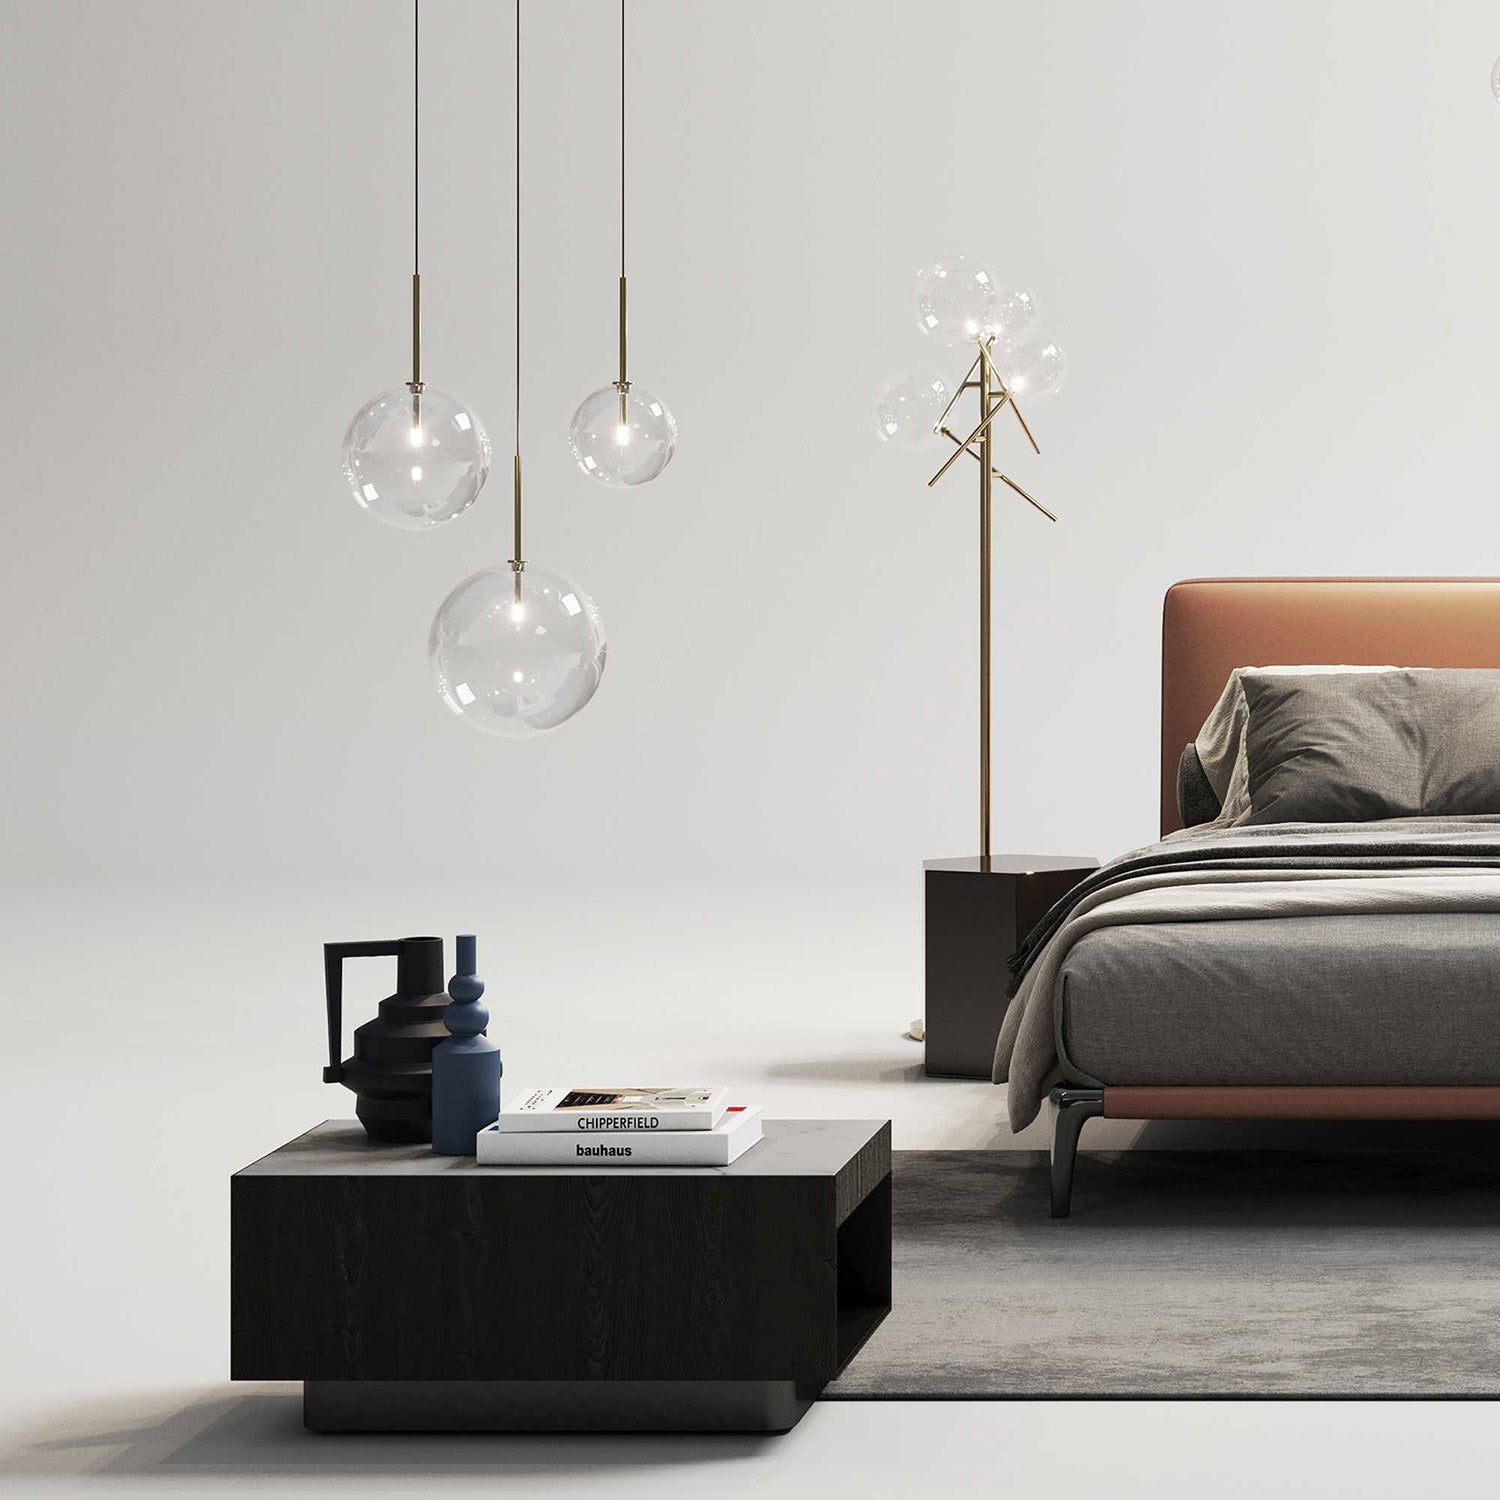 EQUINOXE - Modern floor lamp with glass balls